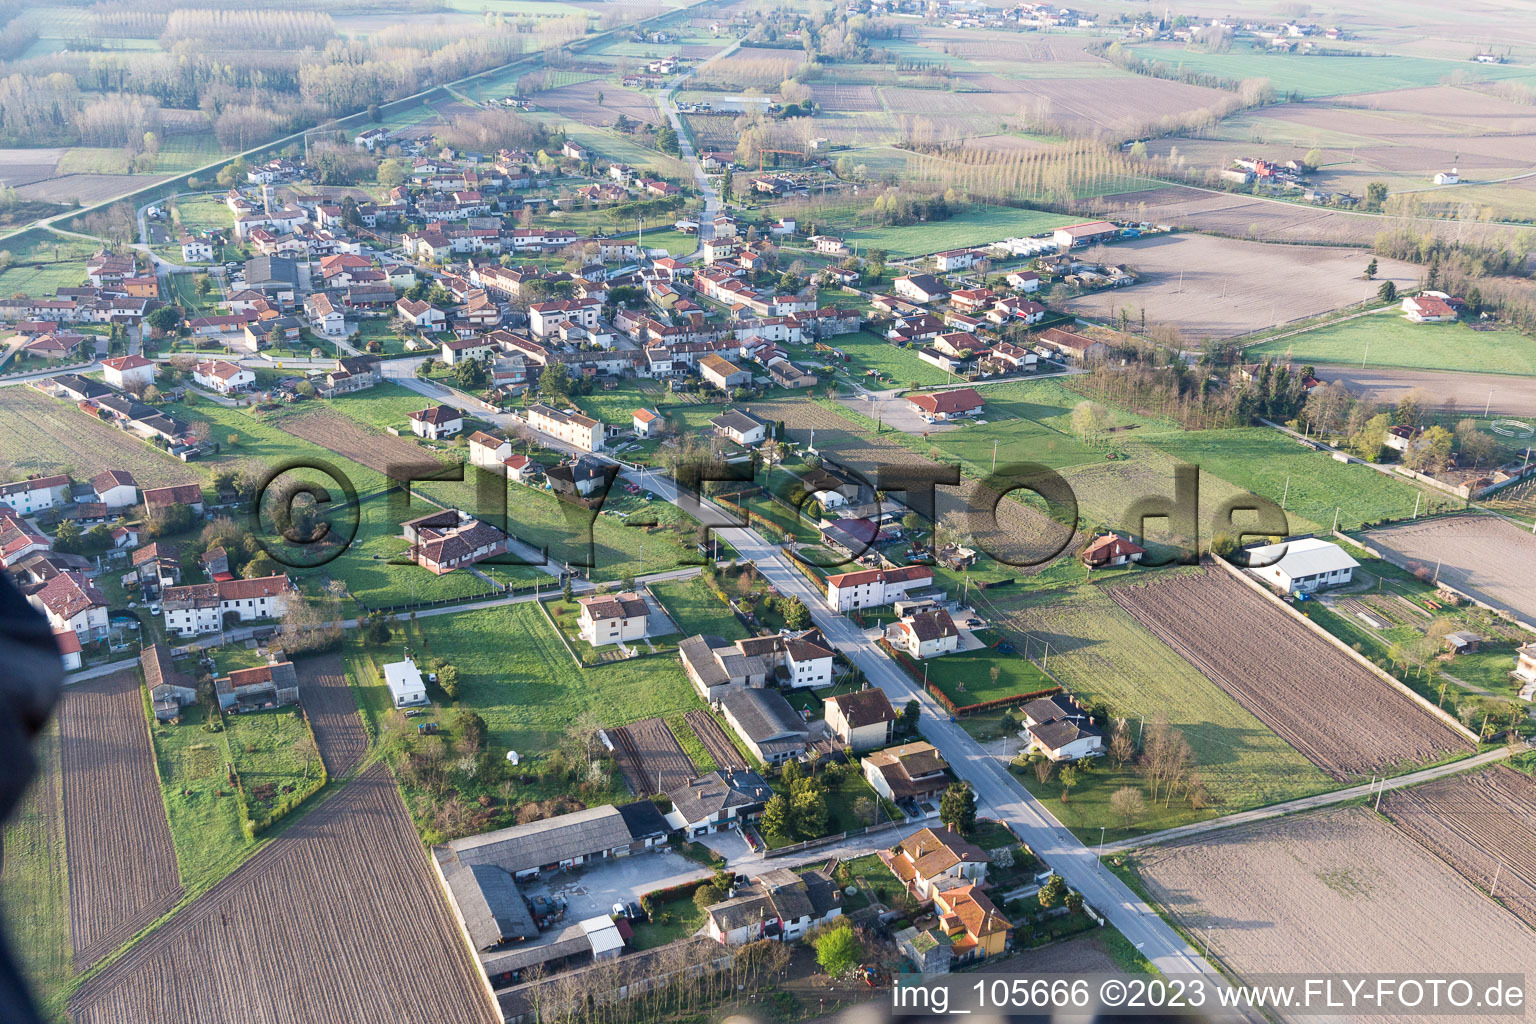 Aerial view of Poiana in the state Friuli Venezia Giulia, Italy